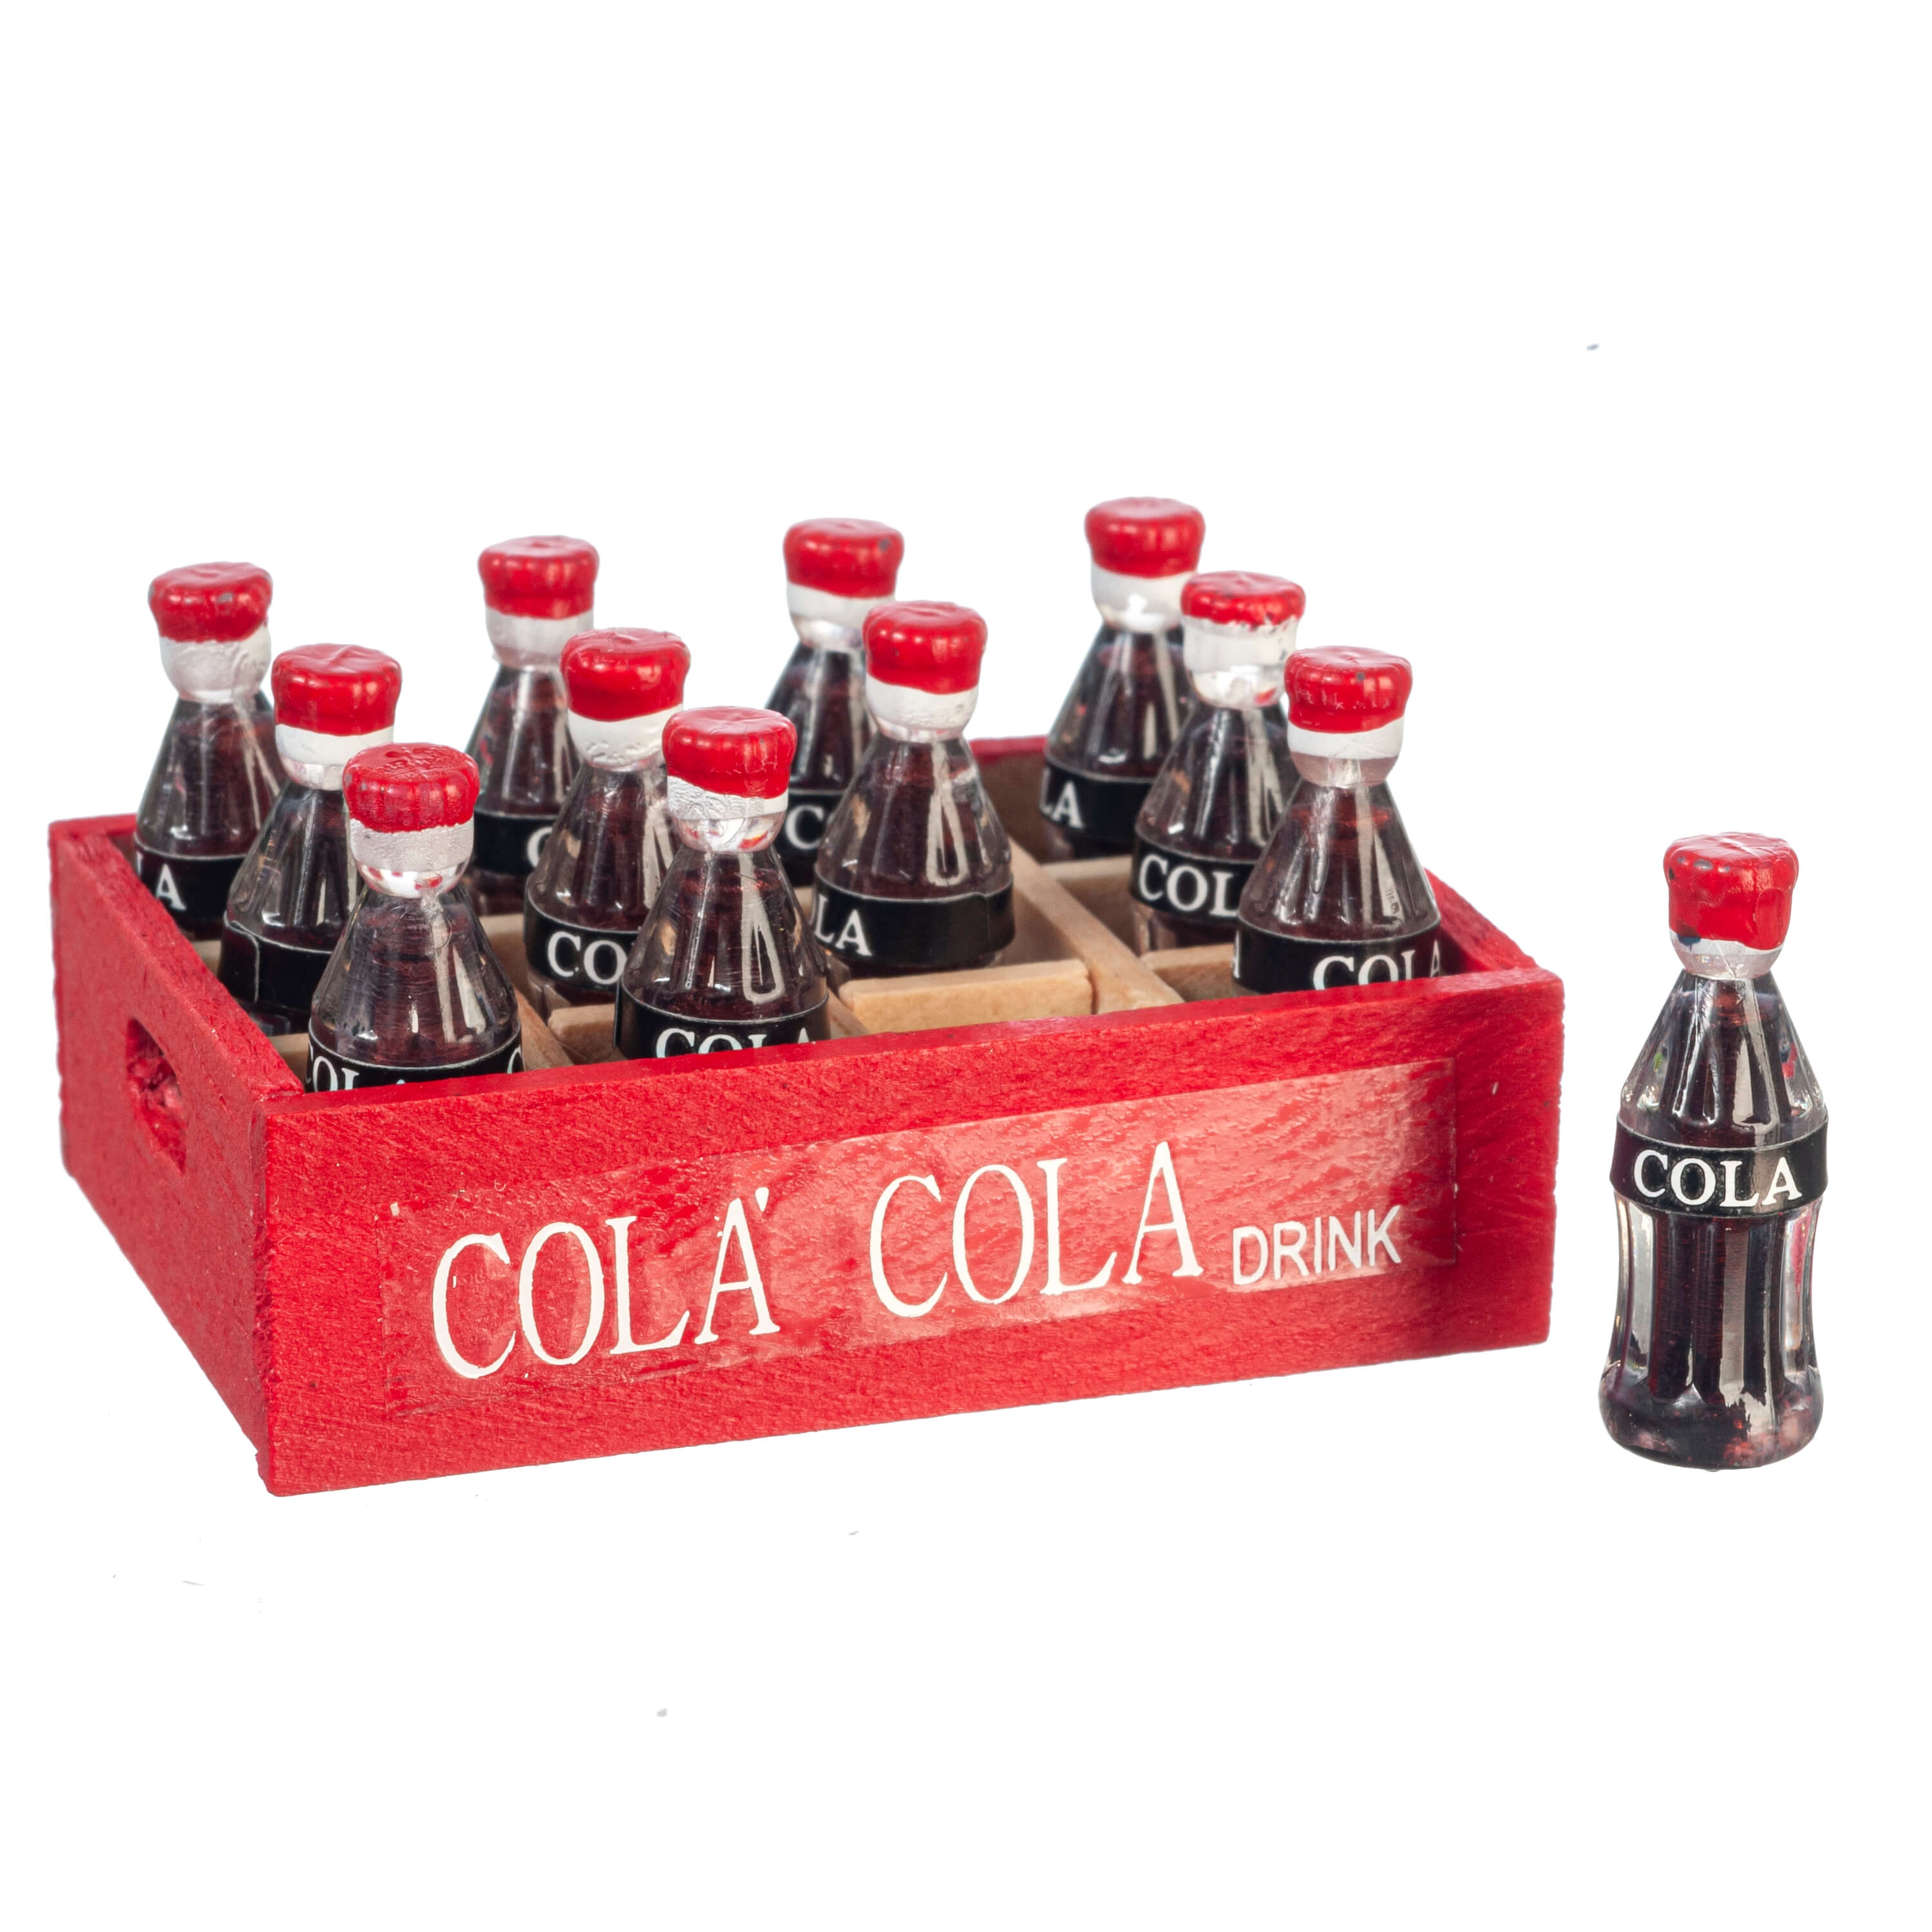 Cola Case w/ Bottles